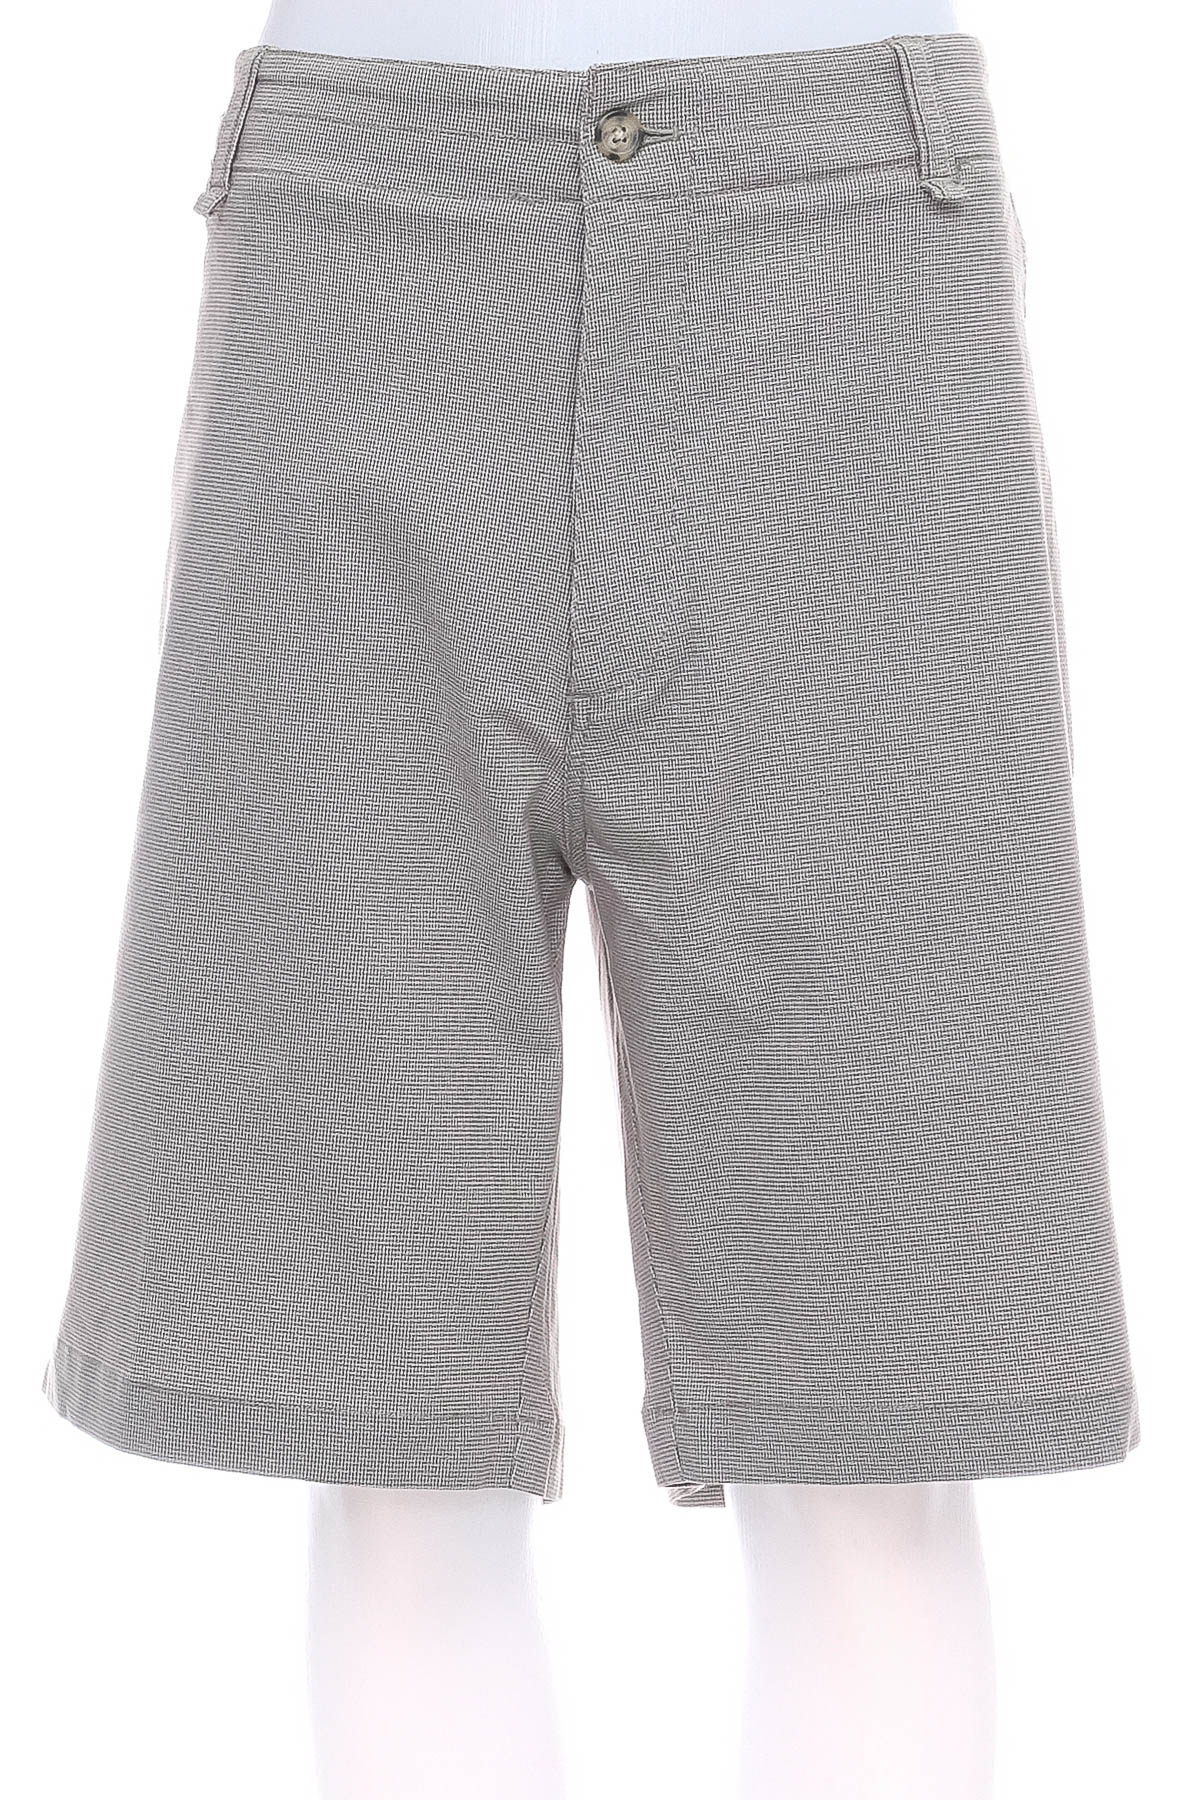 Men's shorts - GAZMAN - 0